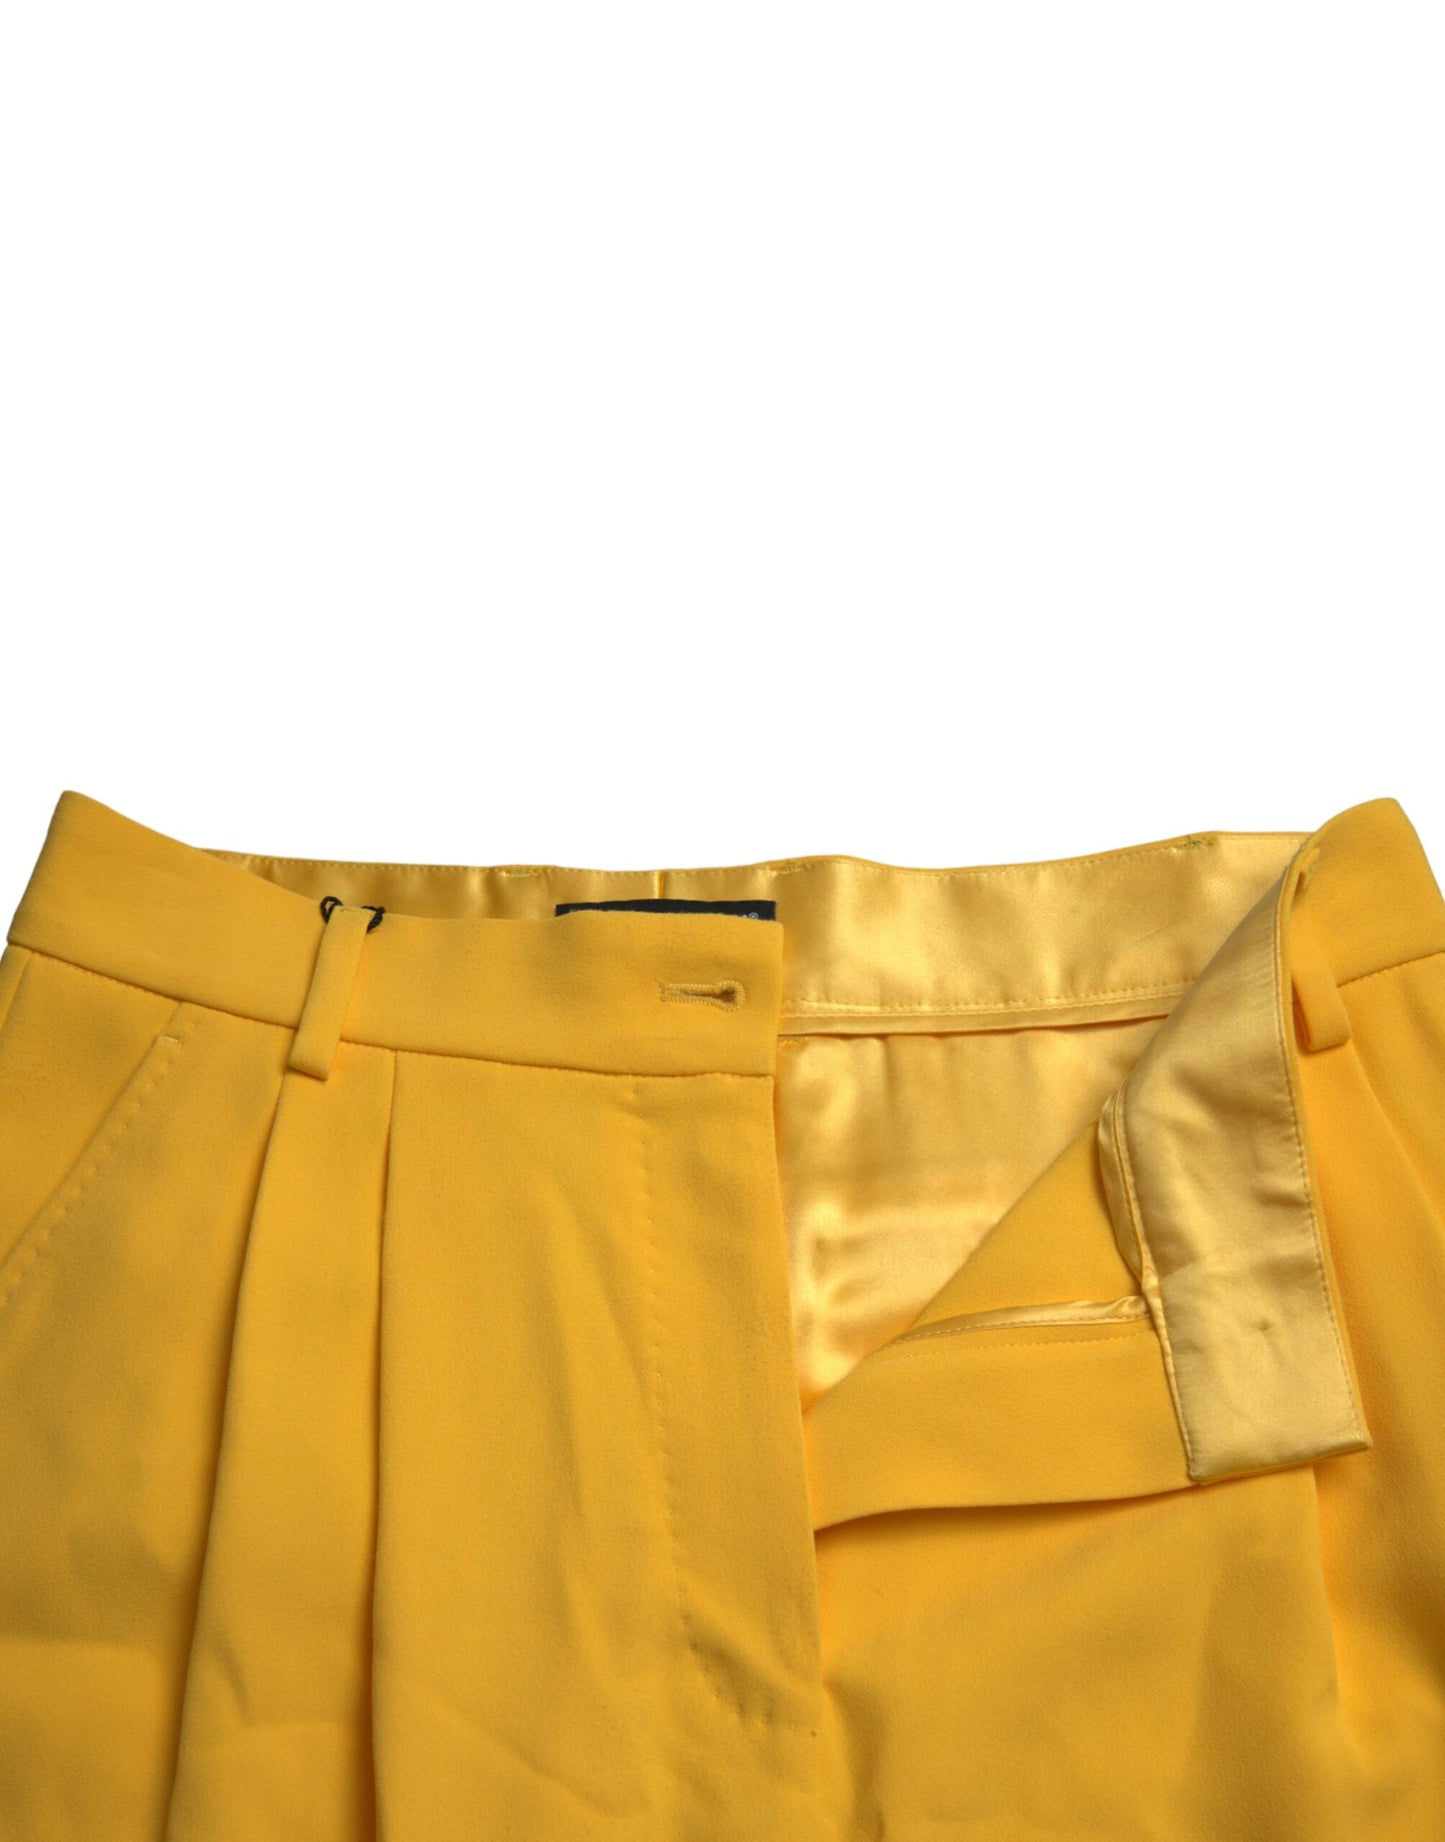 Elegant High Waist Bermuda Shorts in Sunny Yellow